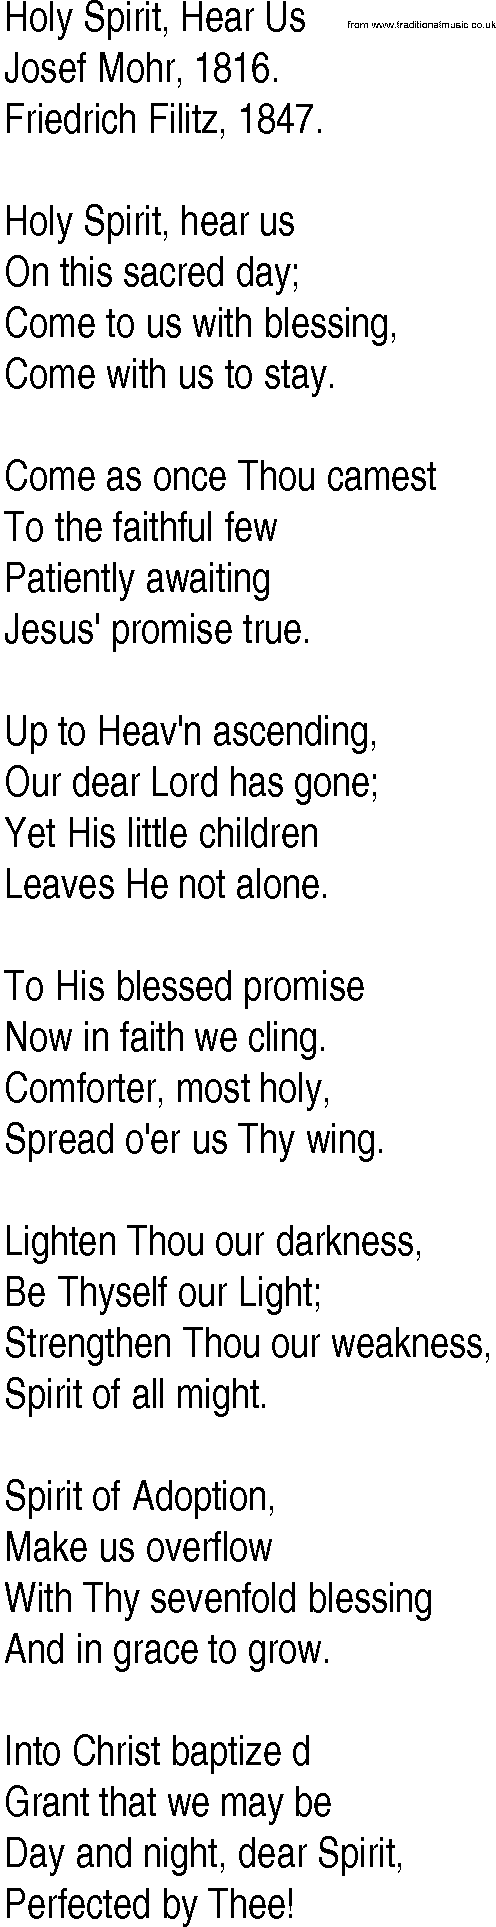 Hymn and Gospel Song: Holy Spirit, Hear Us by Josef Mohr lyrics